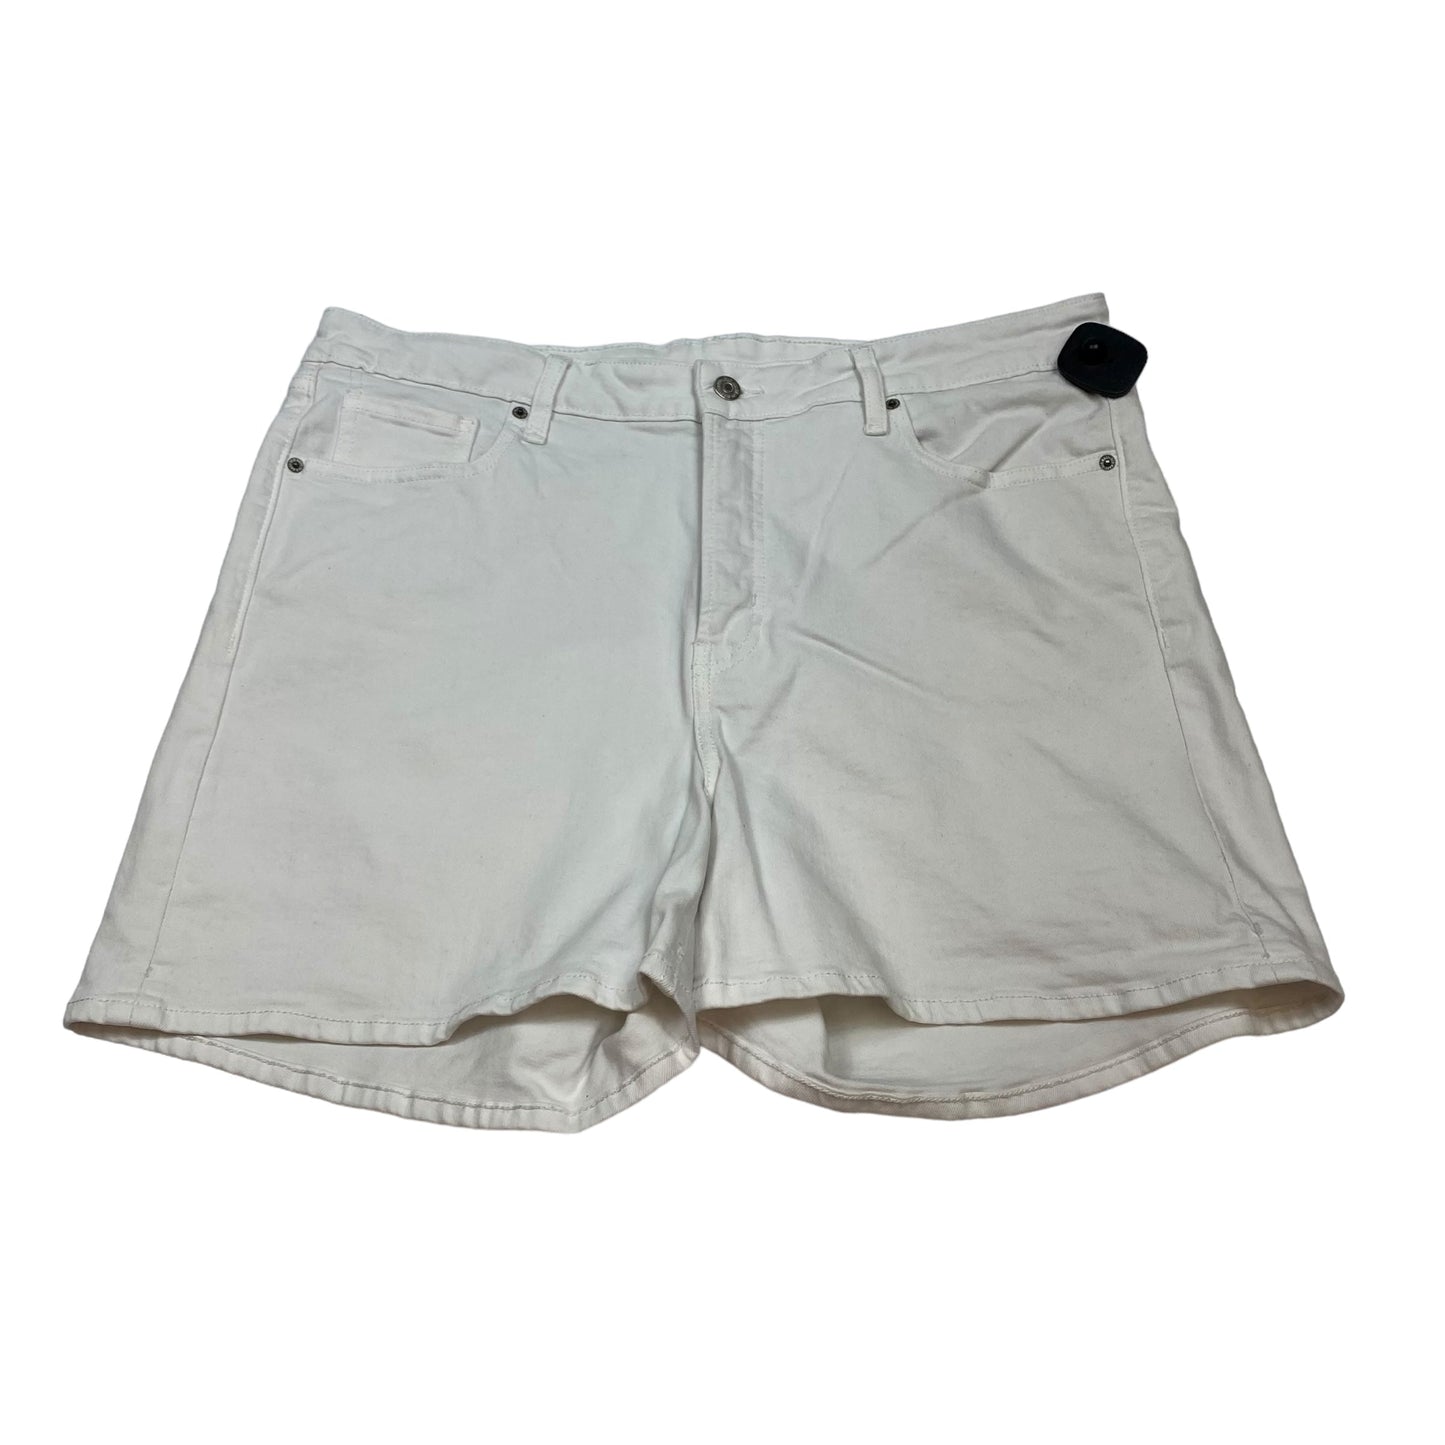 White Shorts Old Navy, Size 18